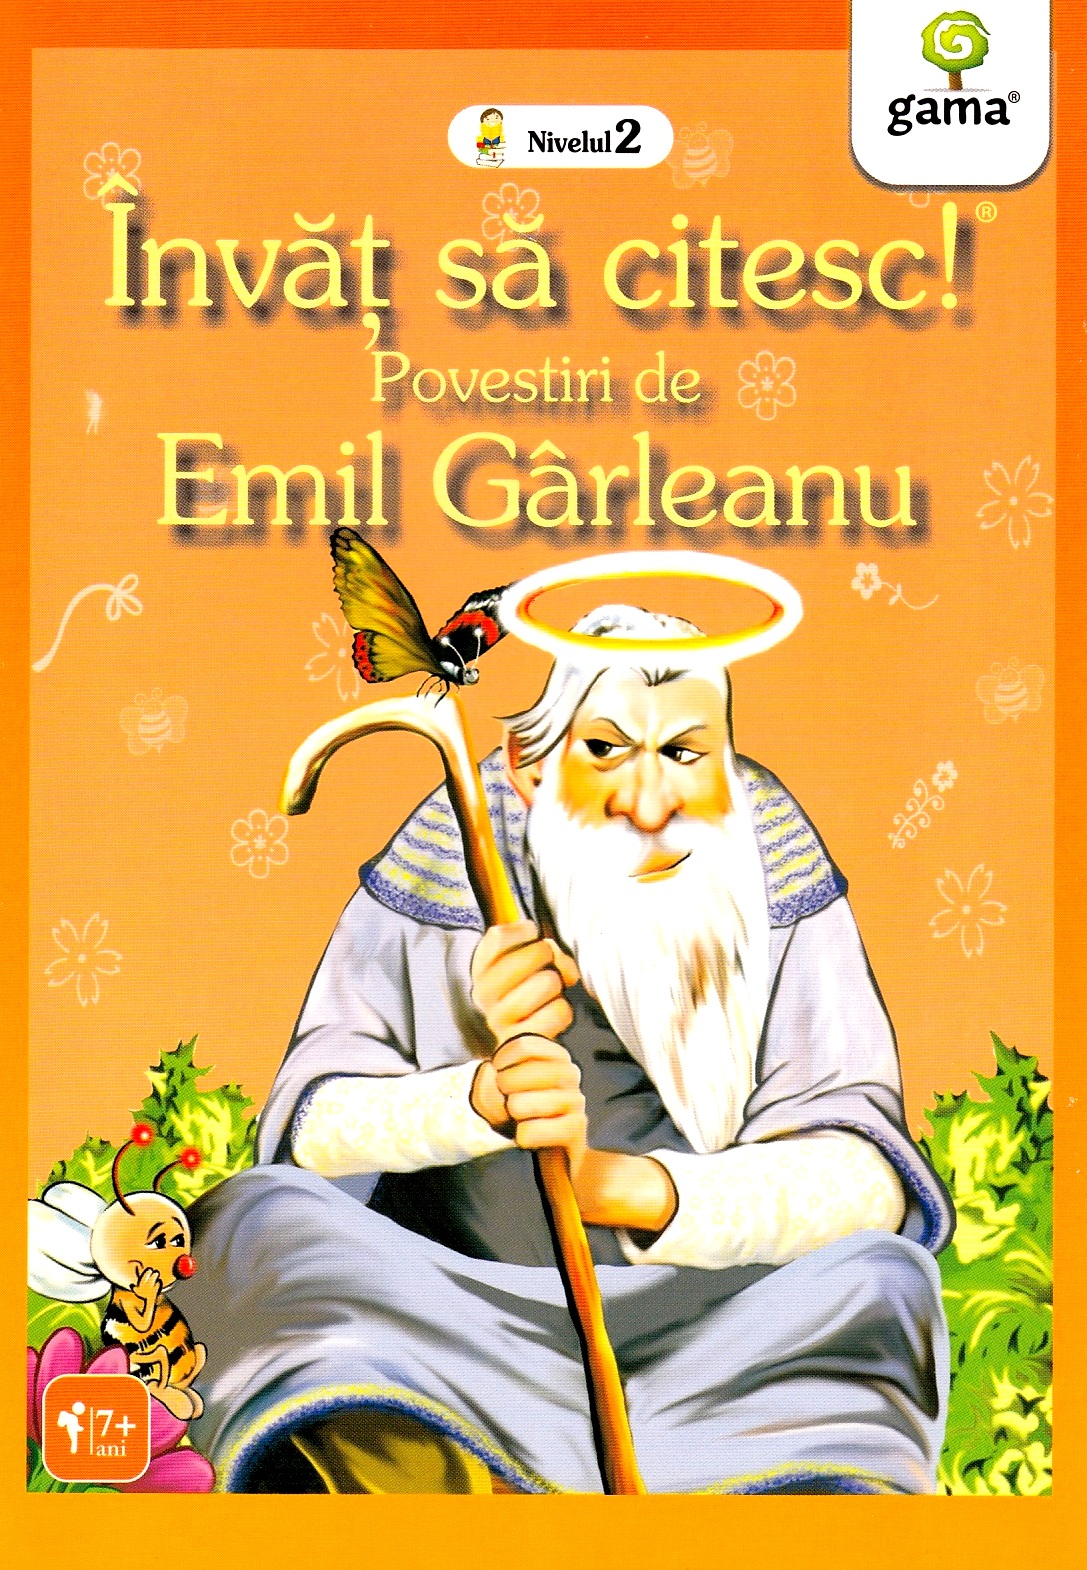 Invat sa citesc! Povestiri de Emil Garleanu